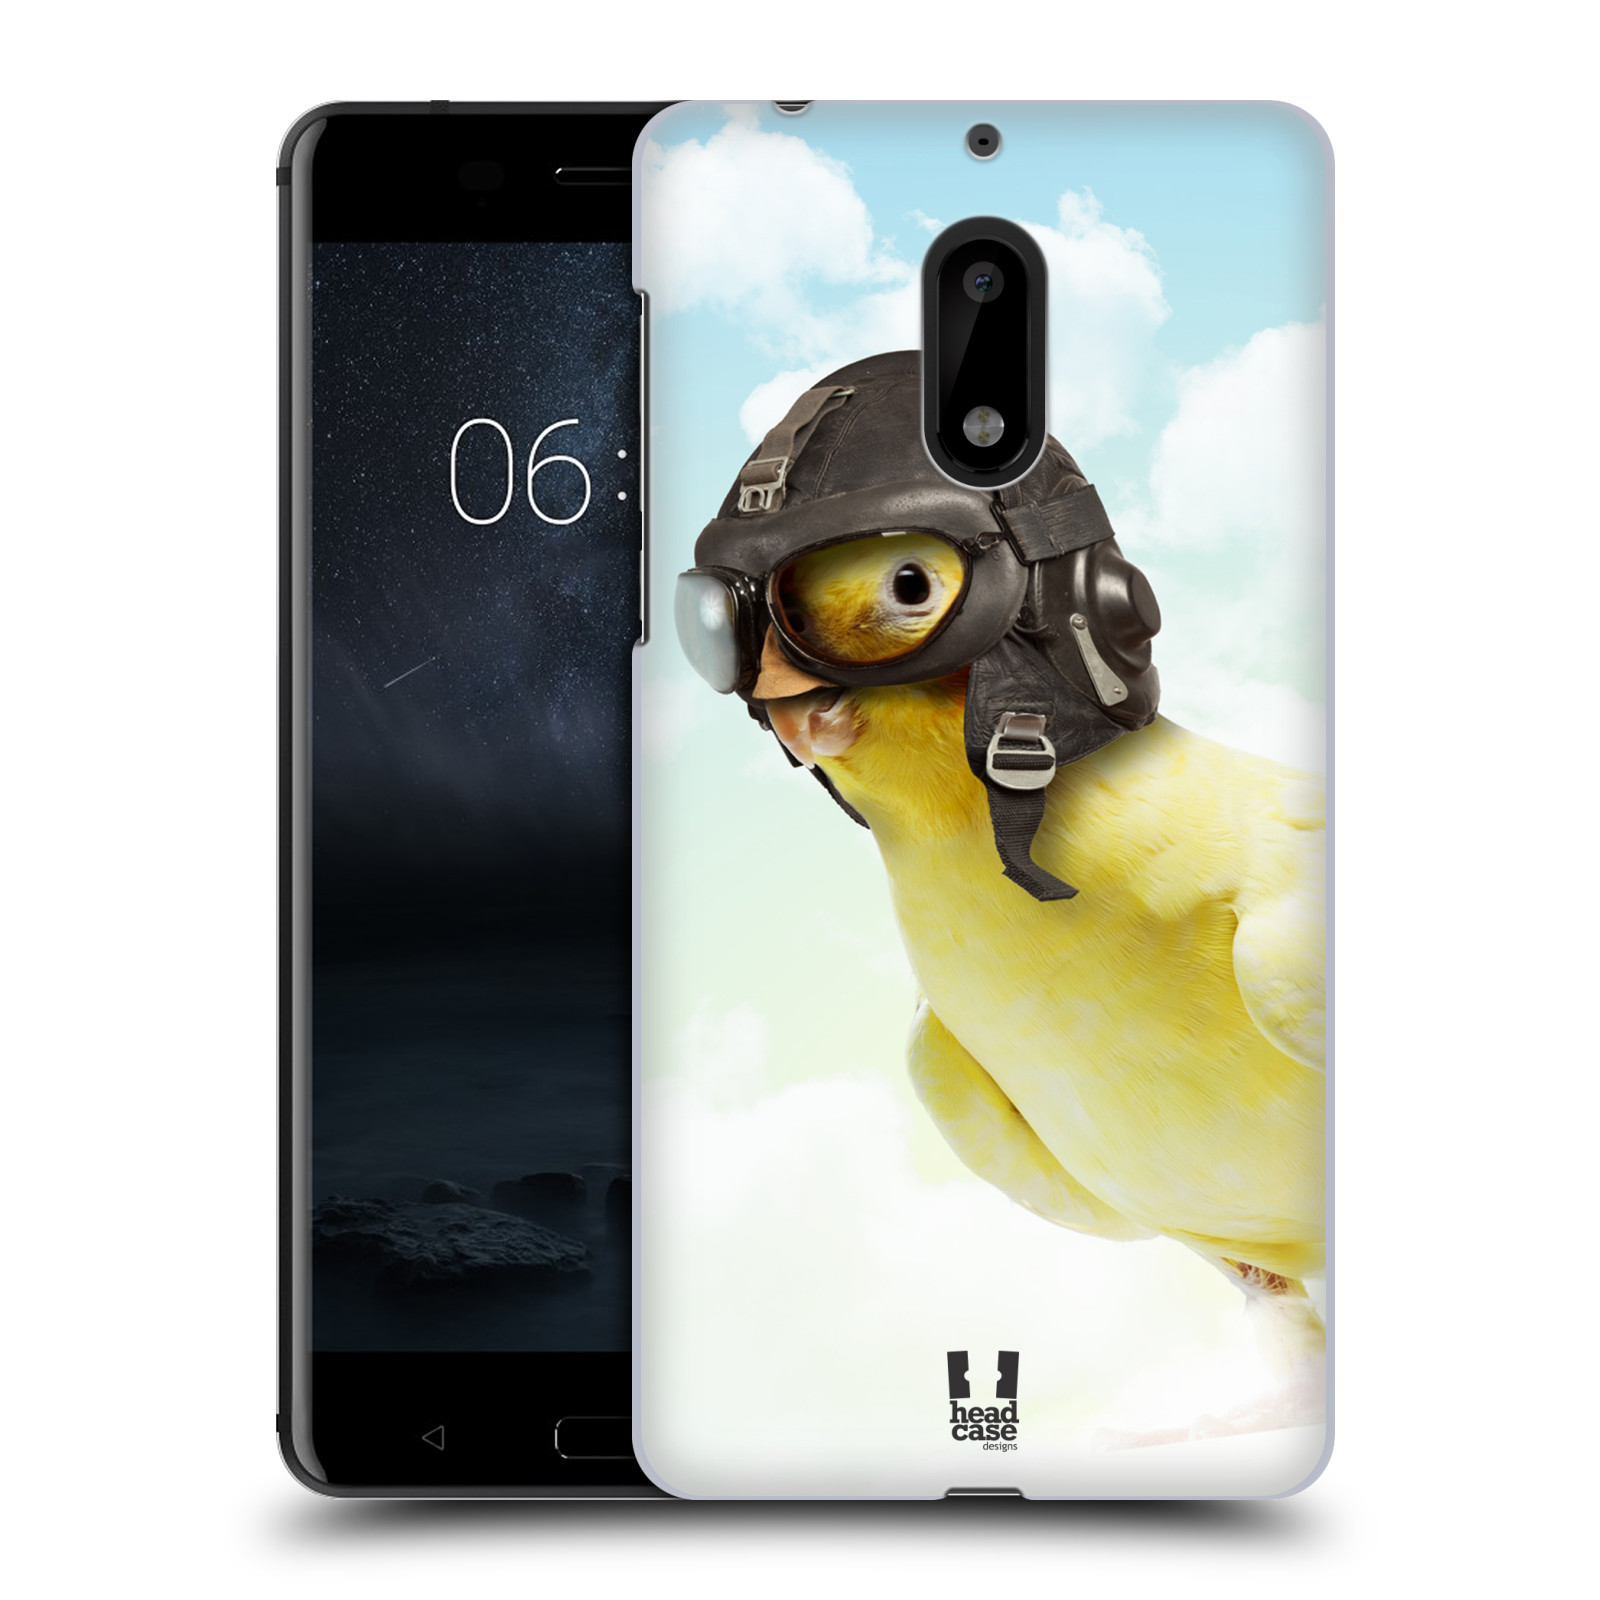 HEAD CASE plastový obal na mobil Nokia 6 vzor Legrační zvířátka ptáček letec